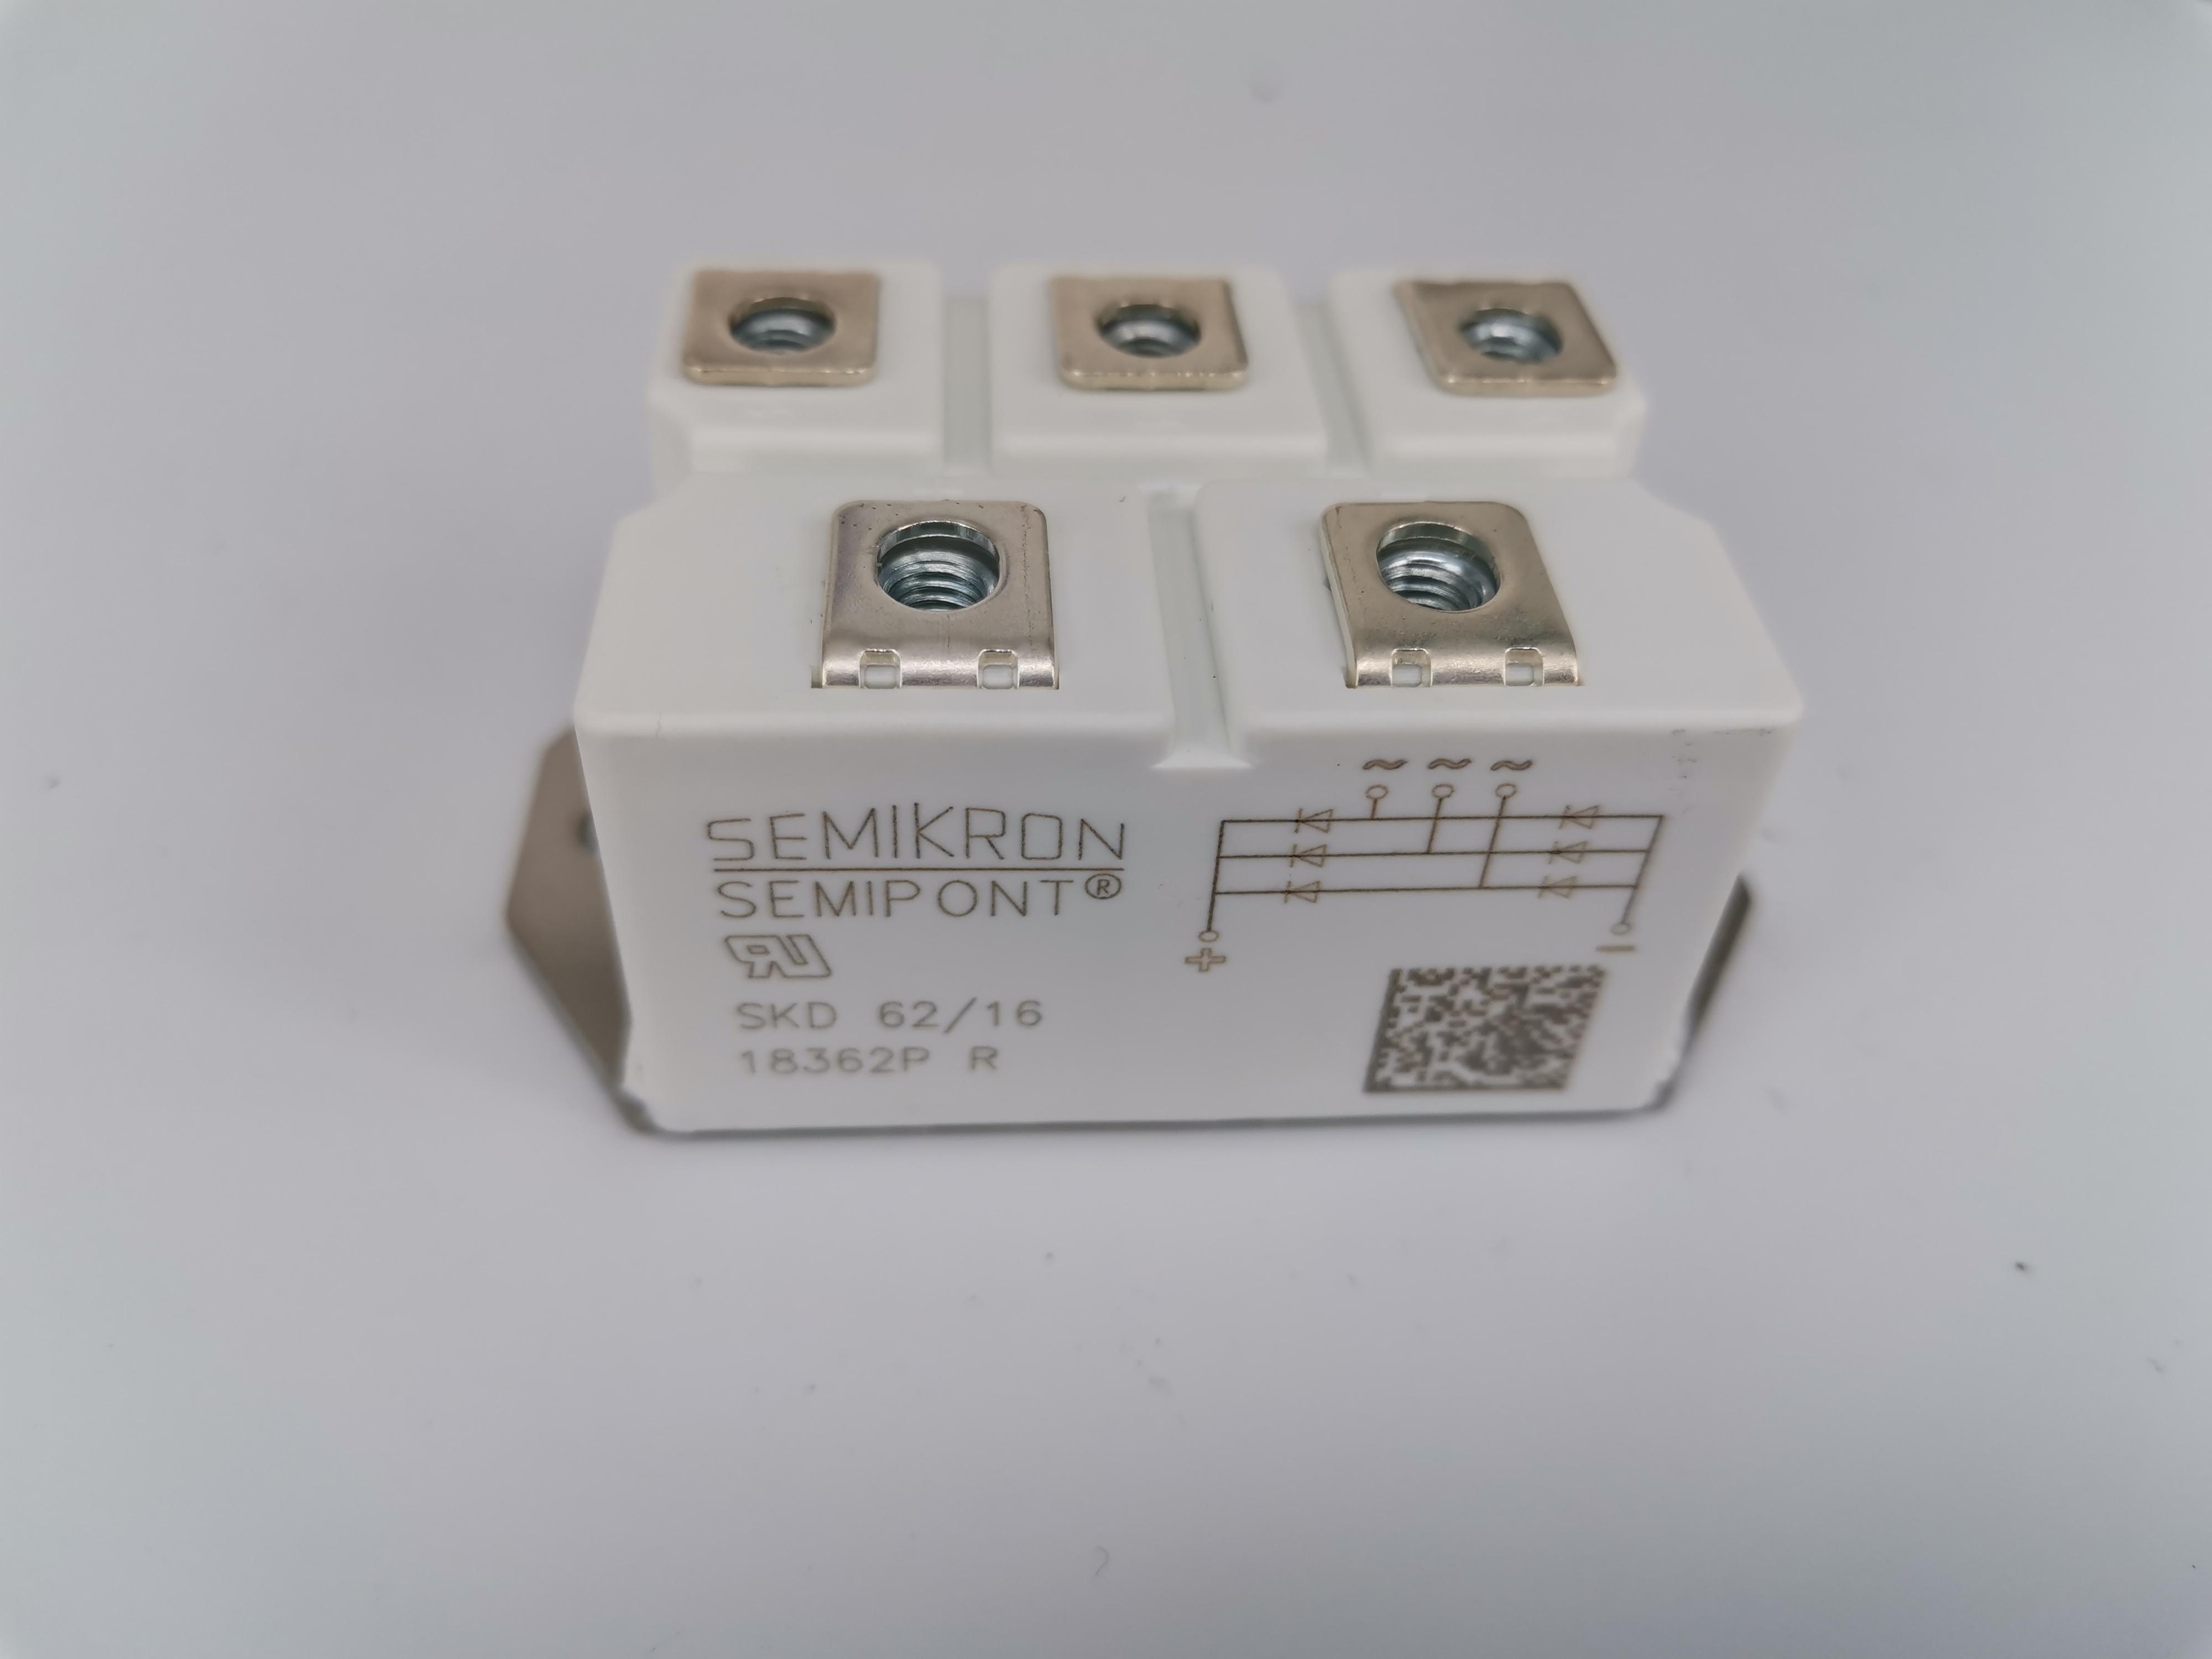 SEMIKRON西门康整流桥模块 SKD62/16 晶闸管可控硅全新原装现货